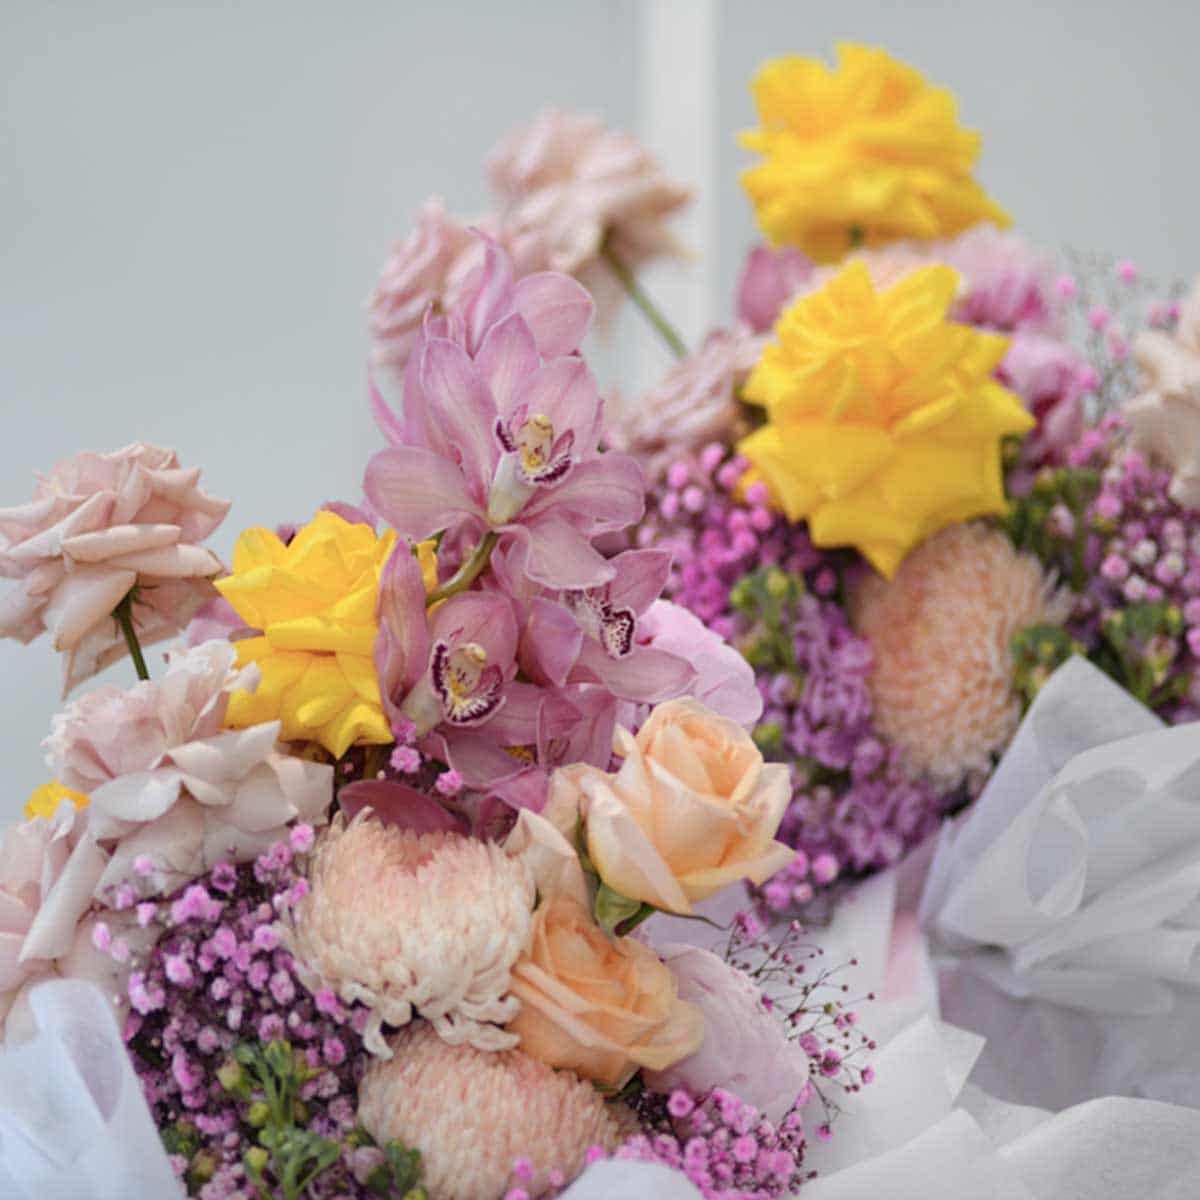 flowers-by-brett-matthew-john-florist-on-thursd-featured